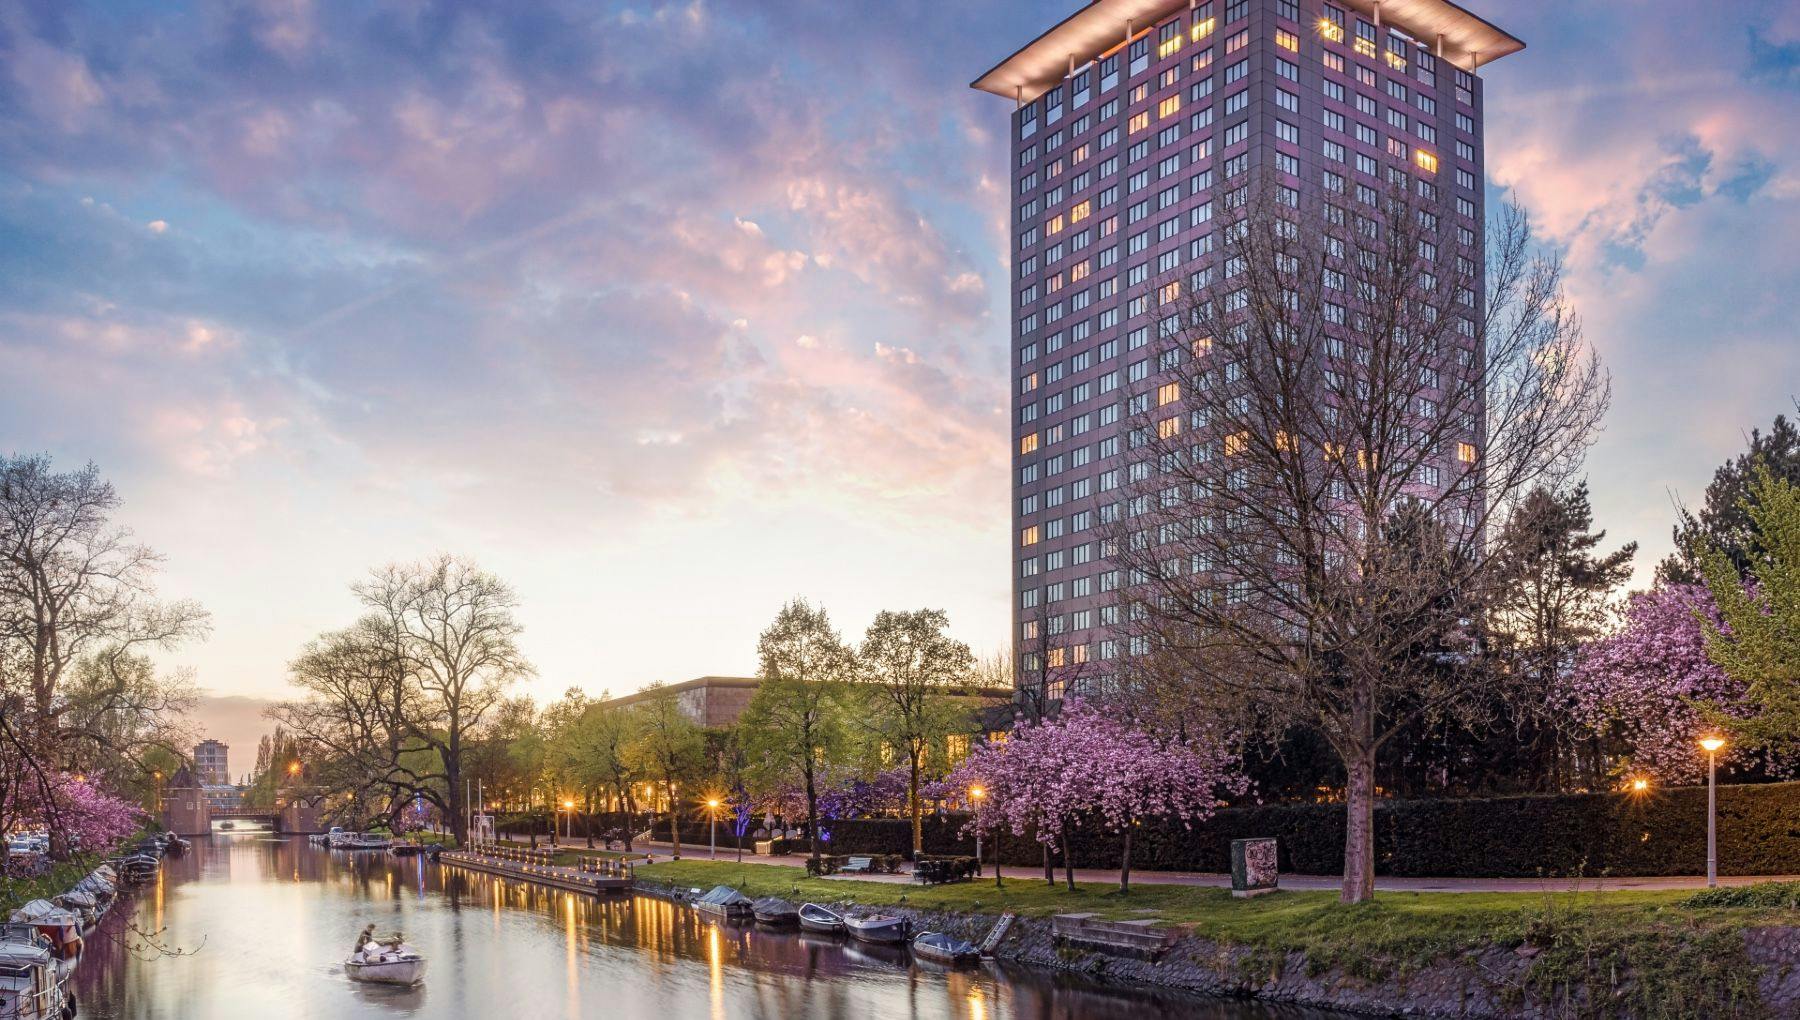 Hotel Okura next to the Amstel canal